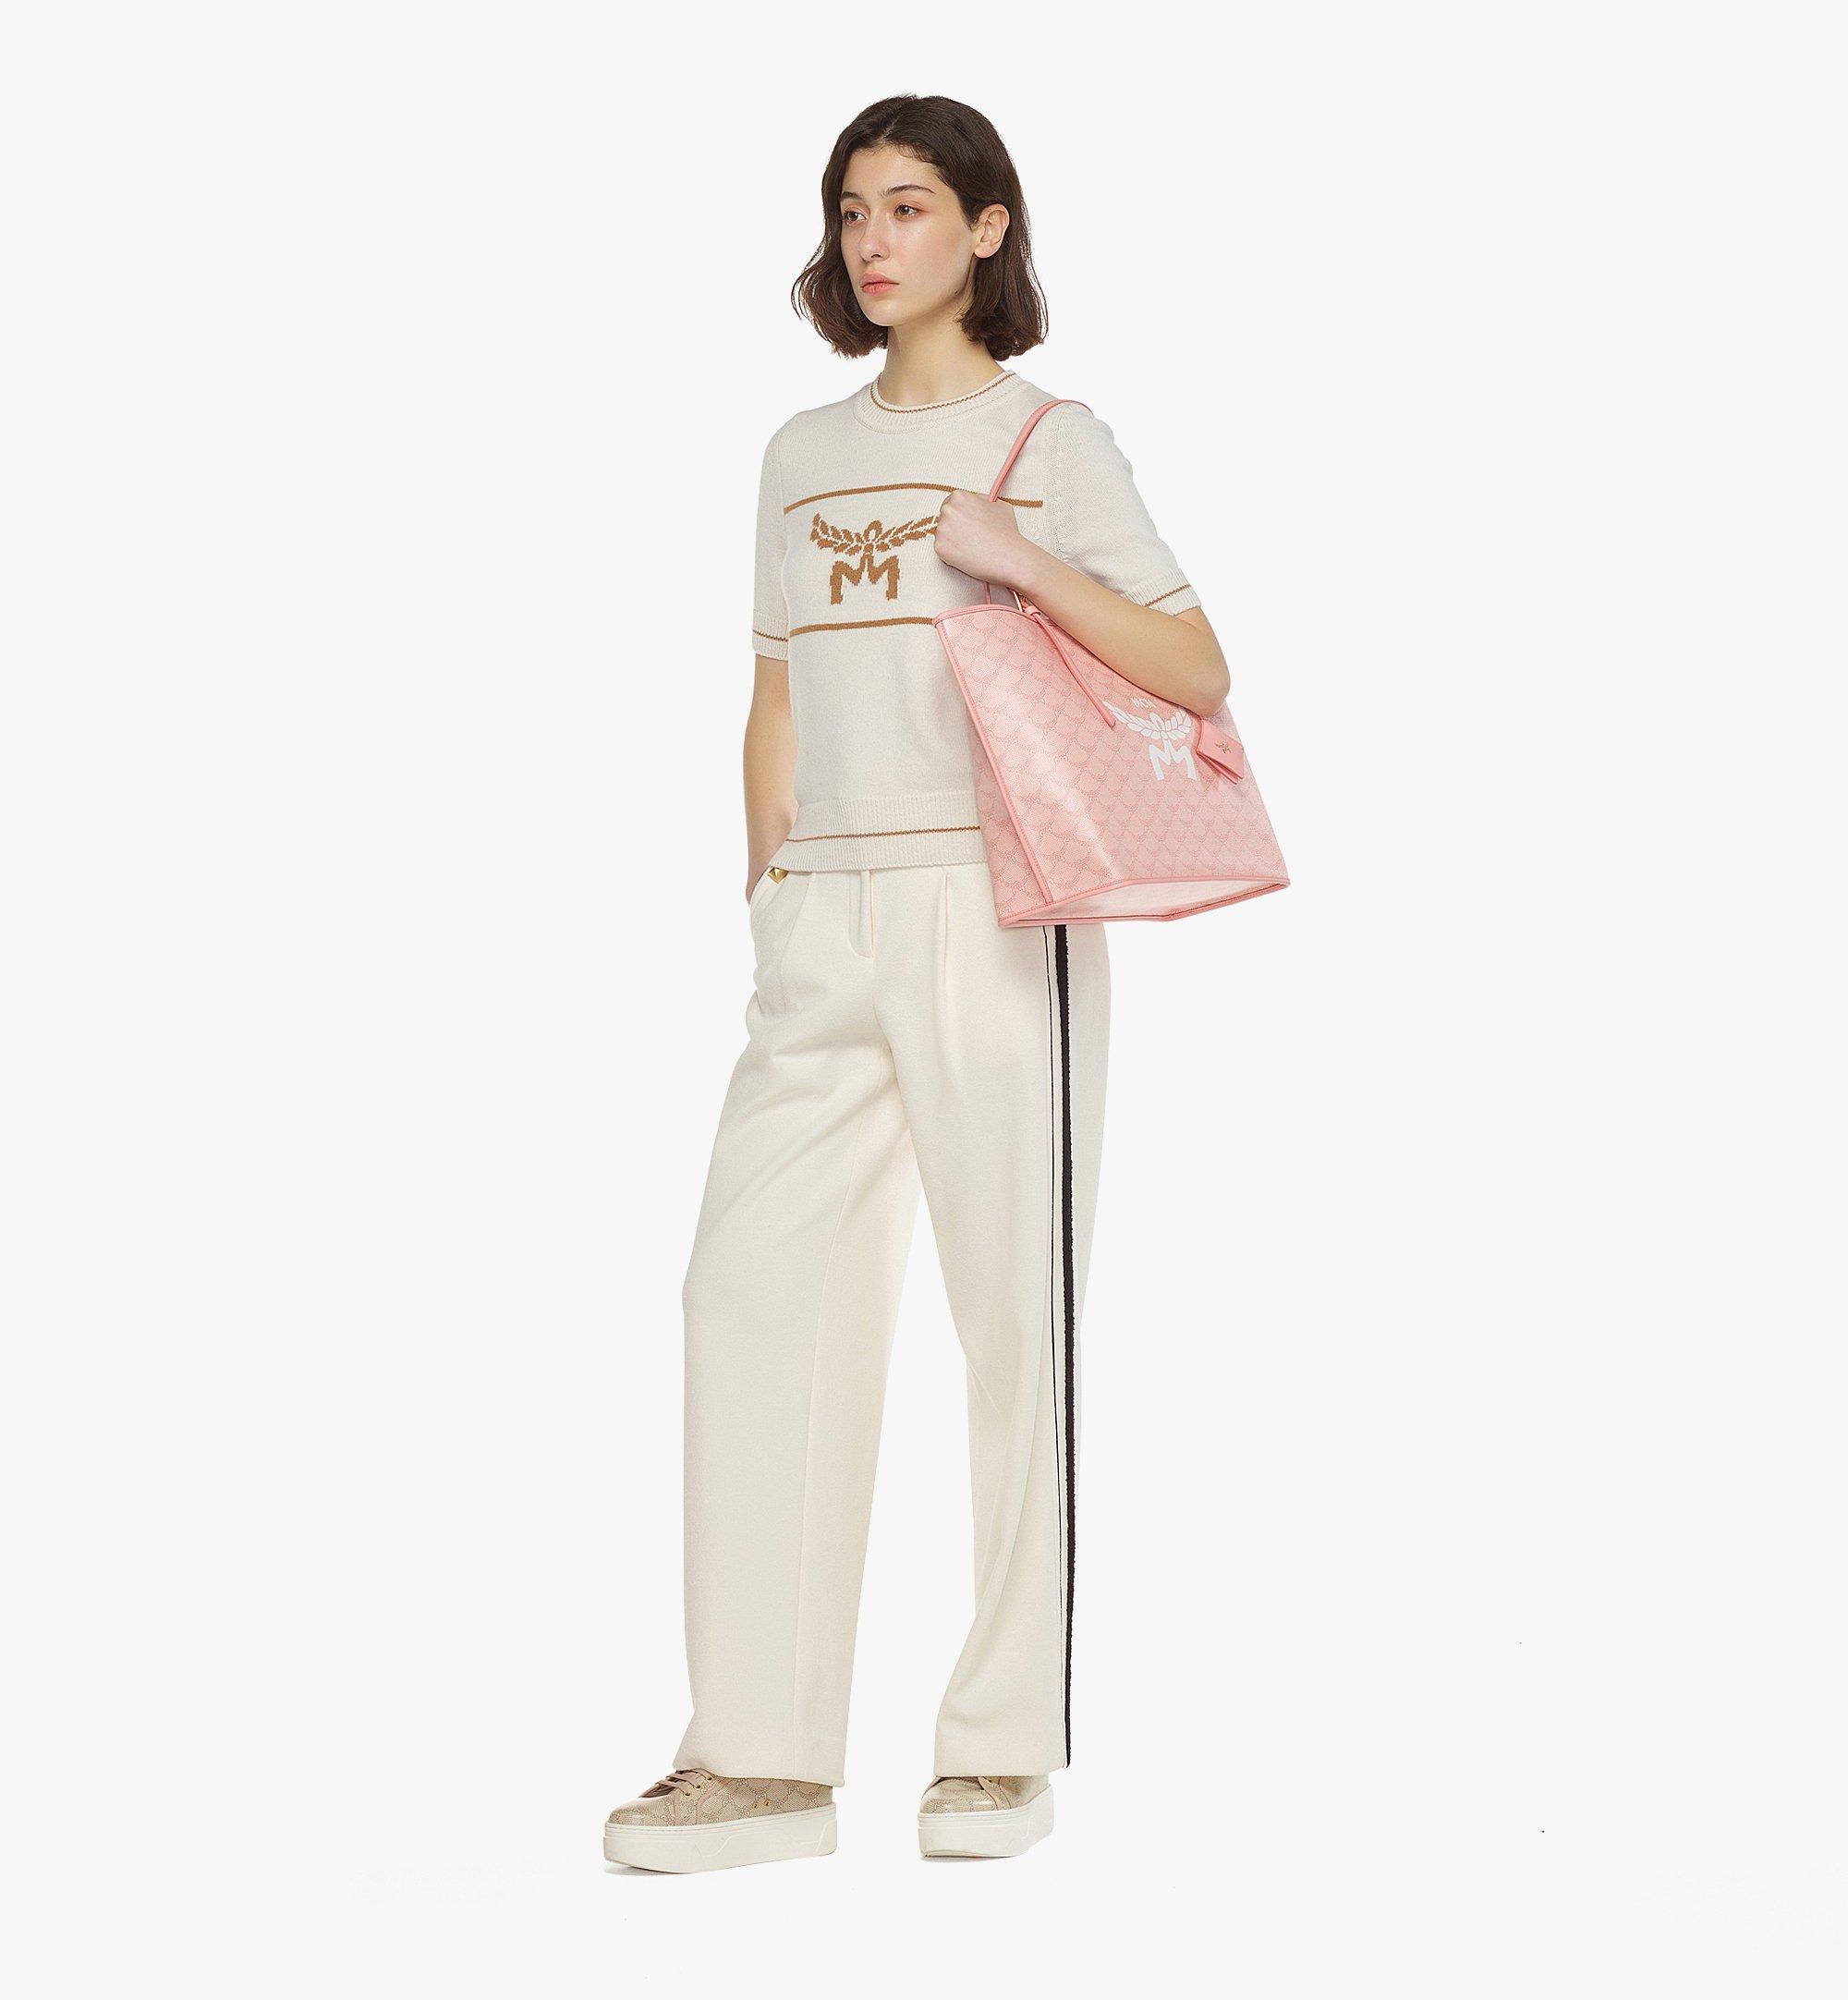 Medium Himmel Shopper in Lauretos Pink | MCM ®US